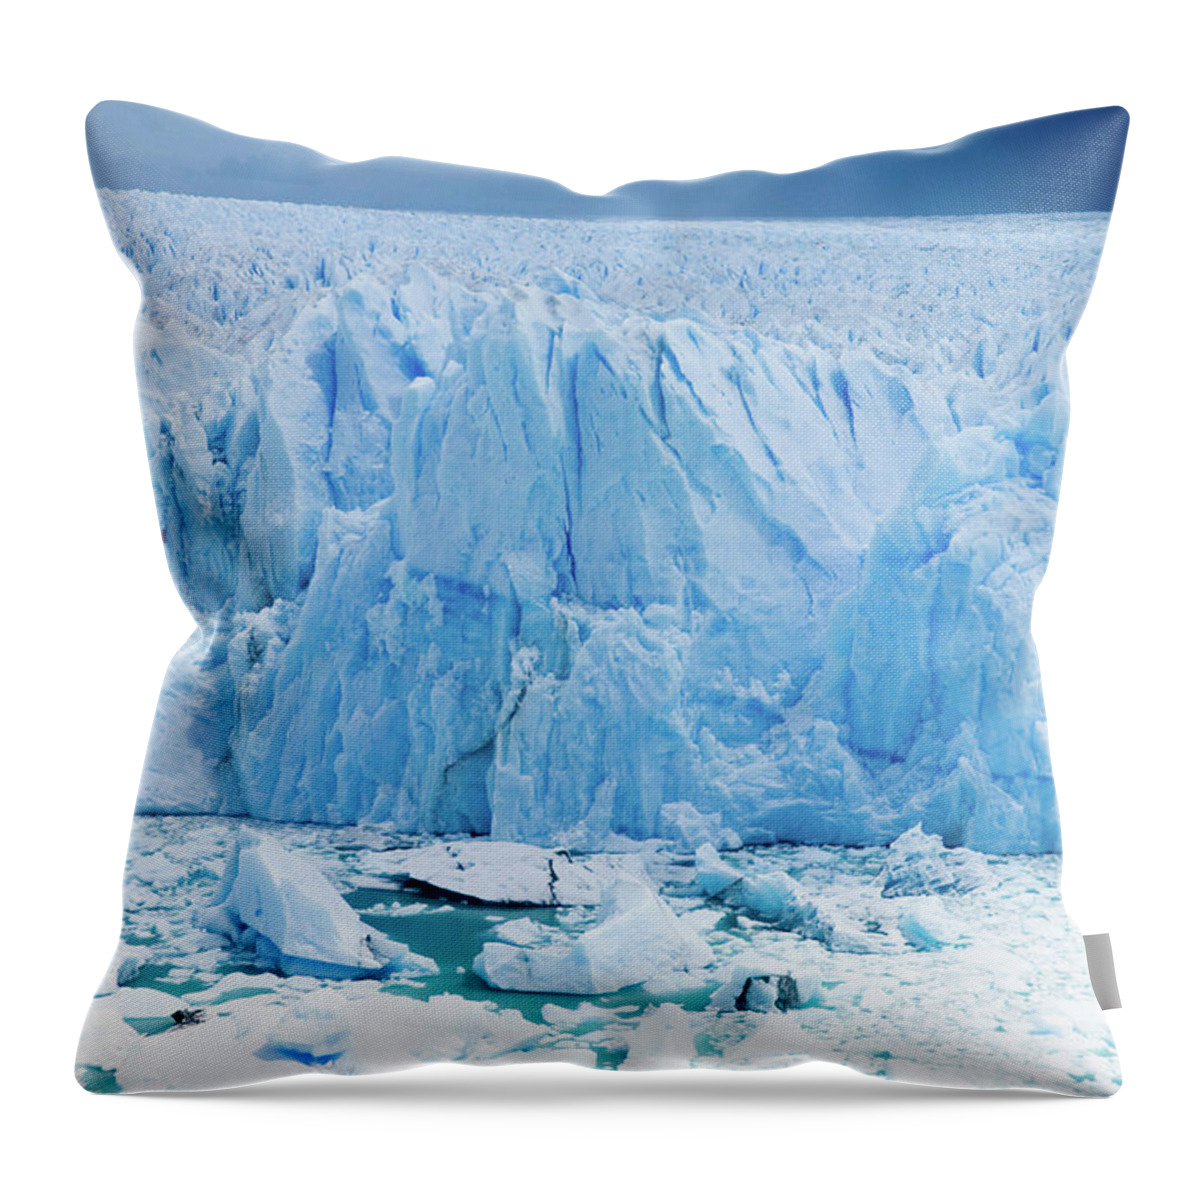 Estock Throw Pillow featuring the digital art Los Glaciares National Park by Rune Johansen